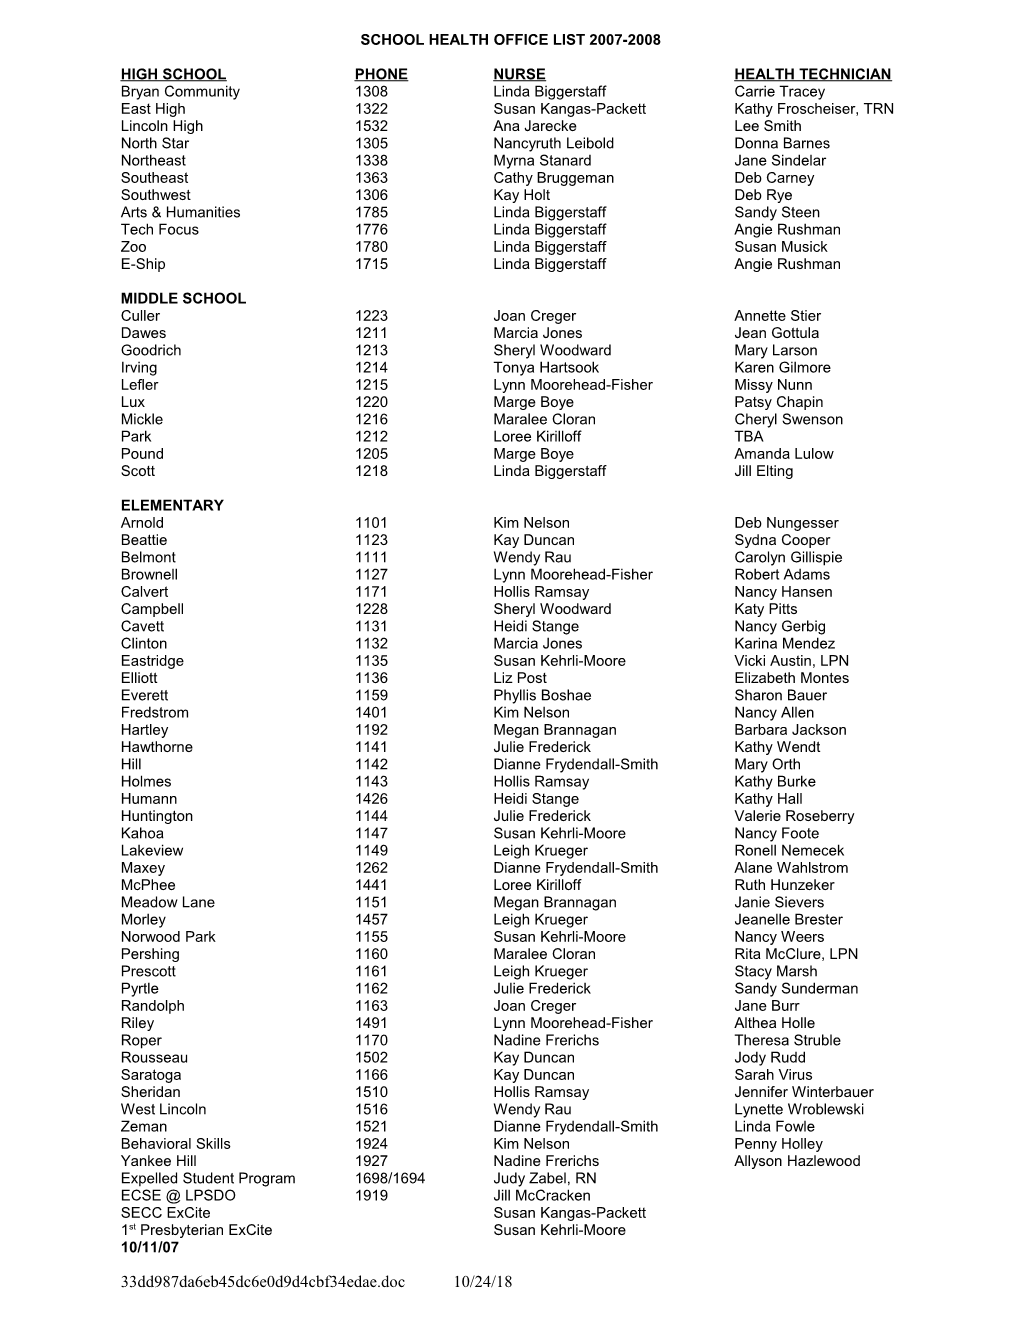 School Health Office List 1996-97